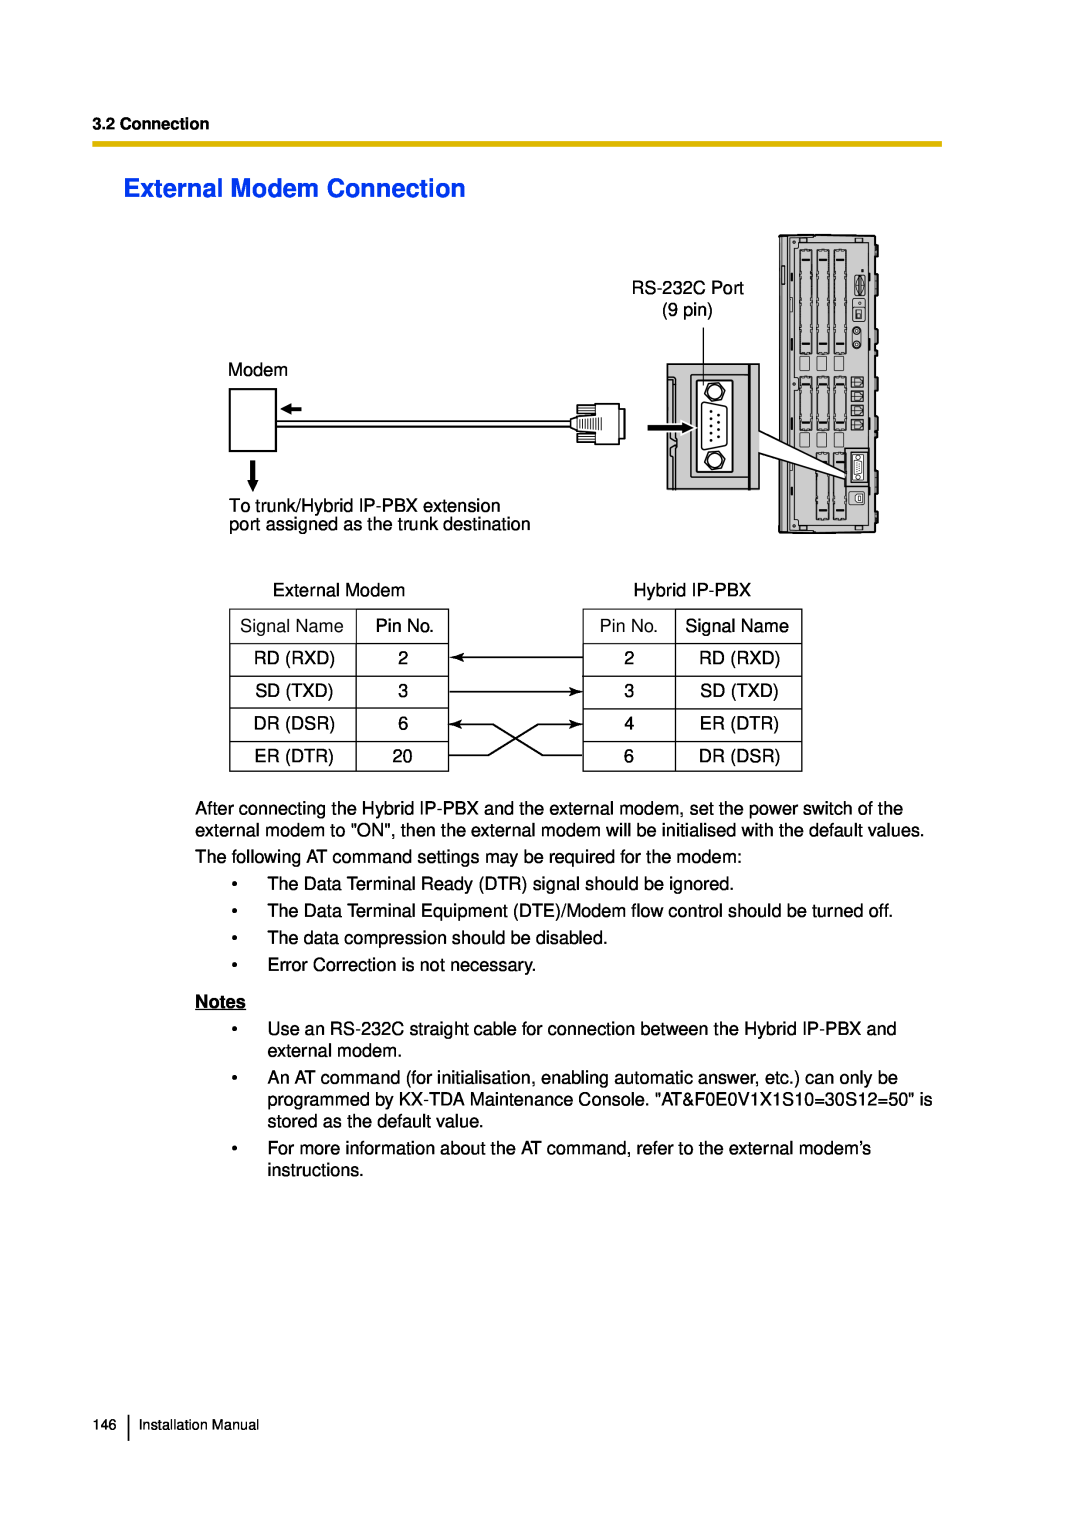 Panasonic KX-TDA30 installation manual External Modem Connection, Notes 